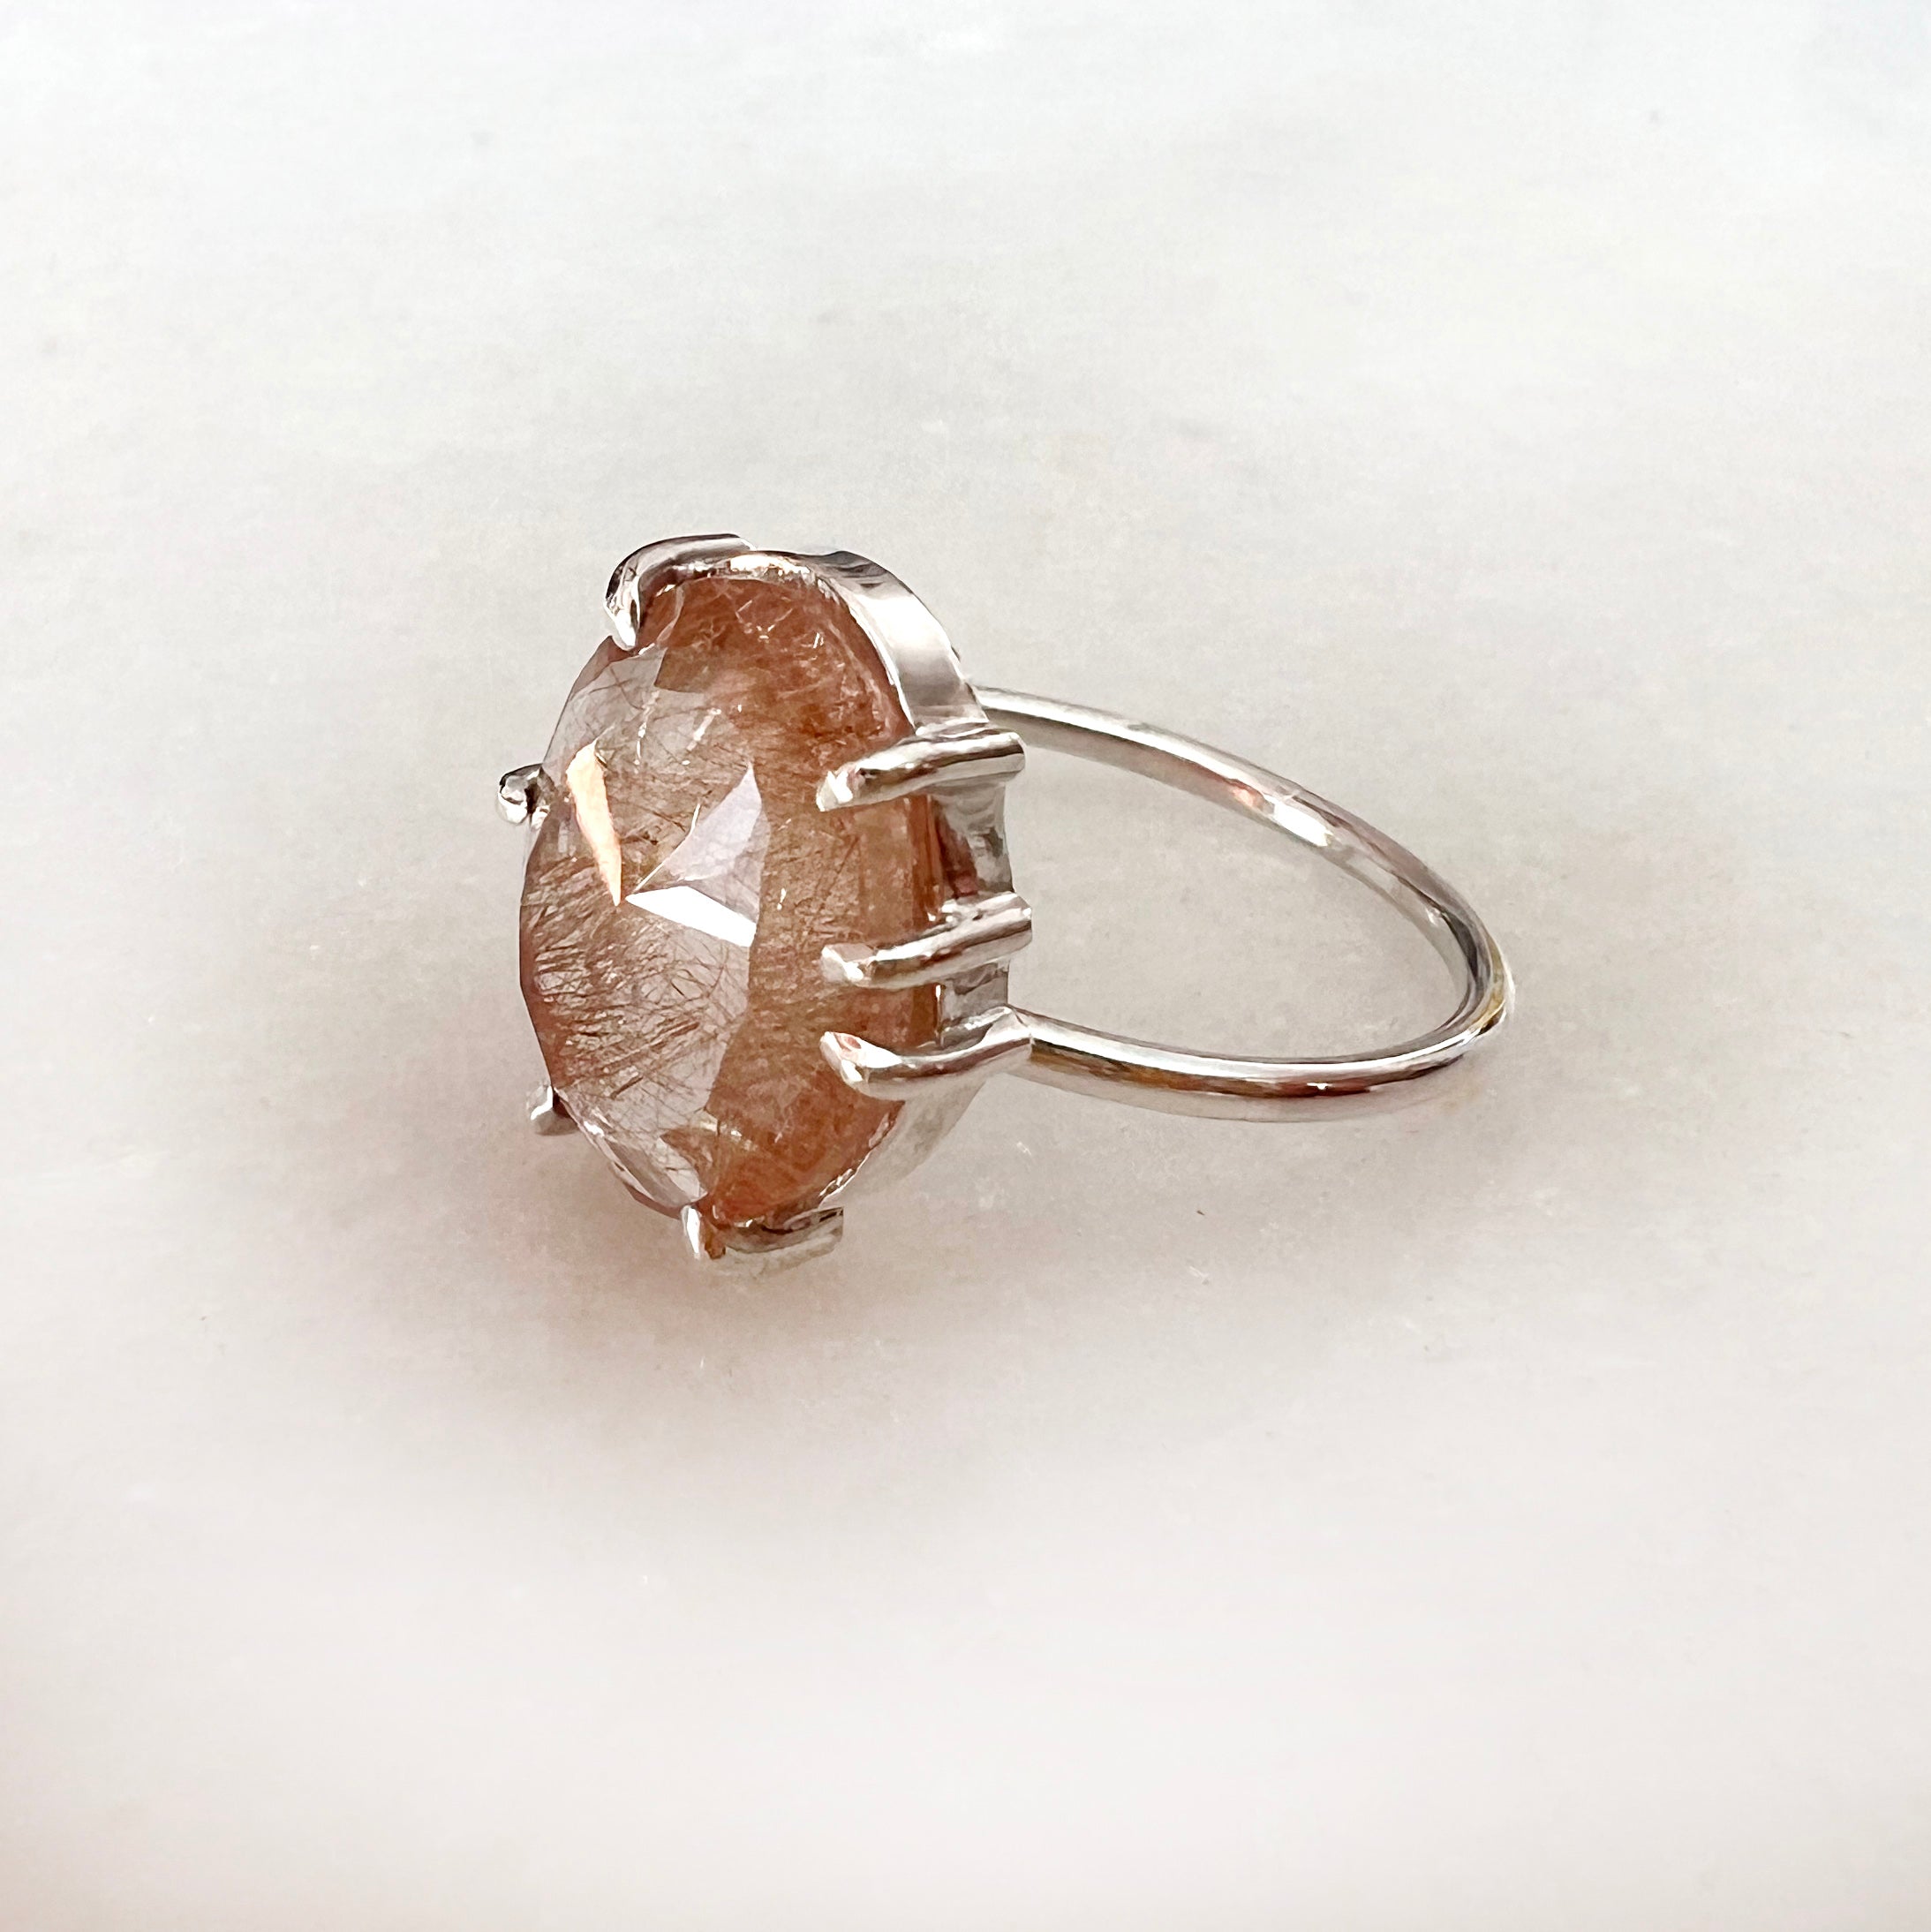 Copper Rutile Quartz Ring // size 7